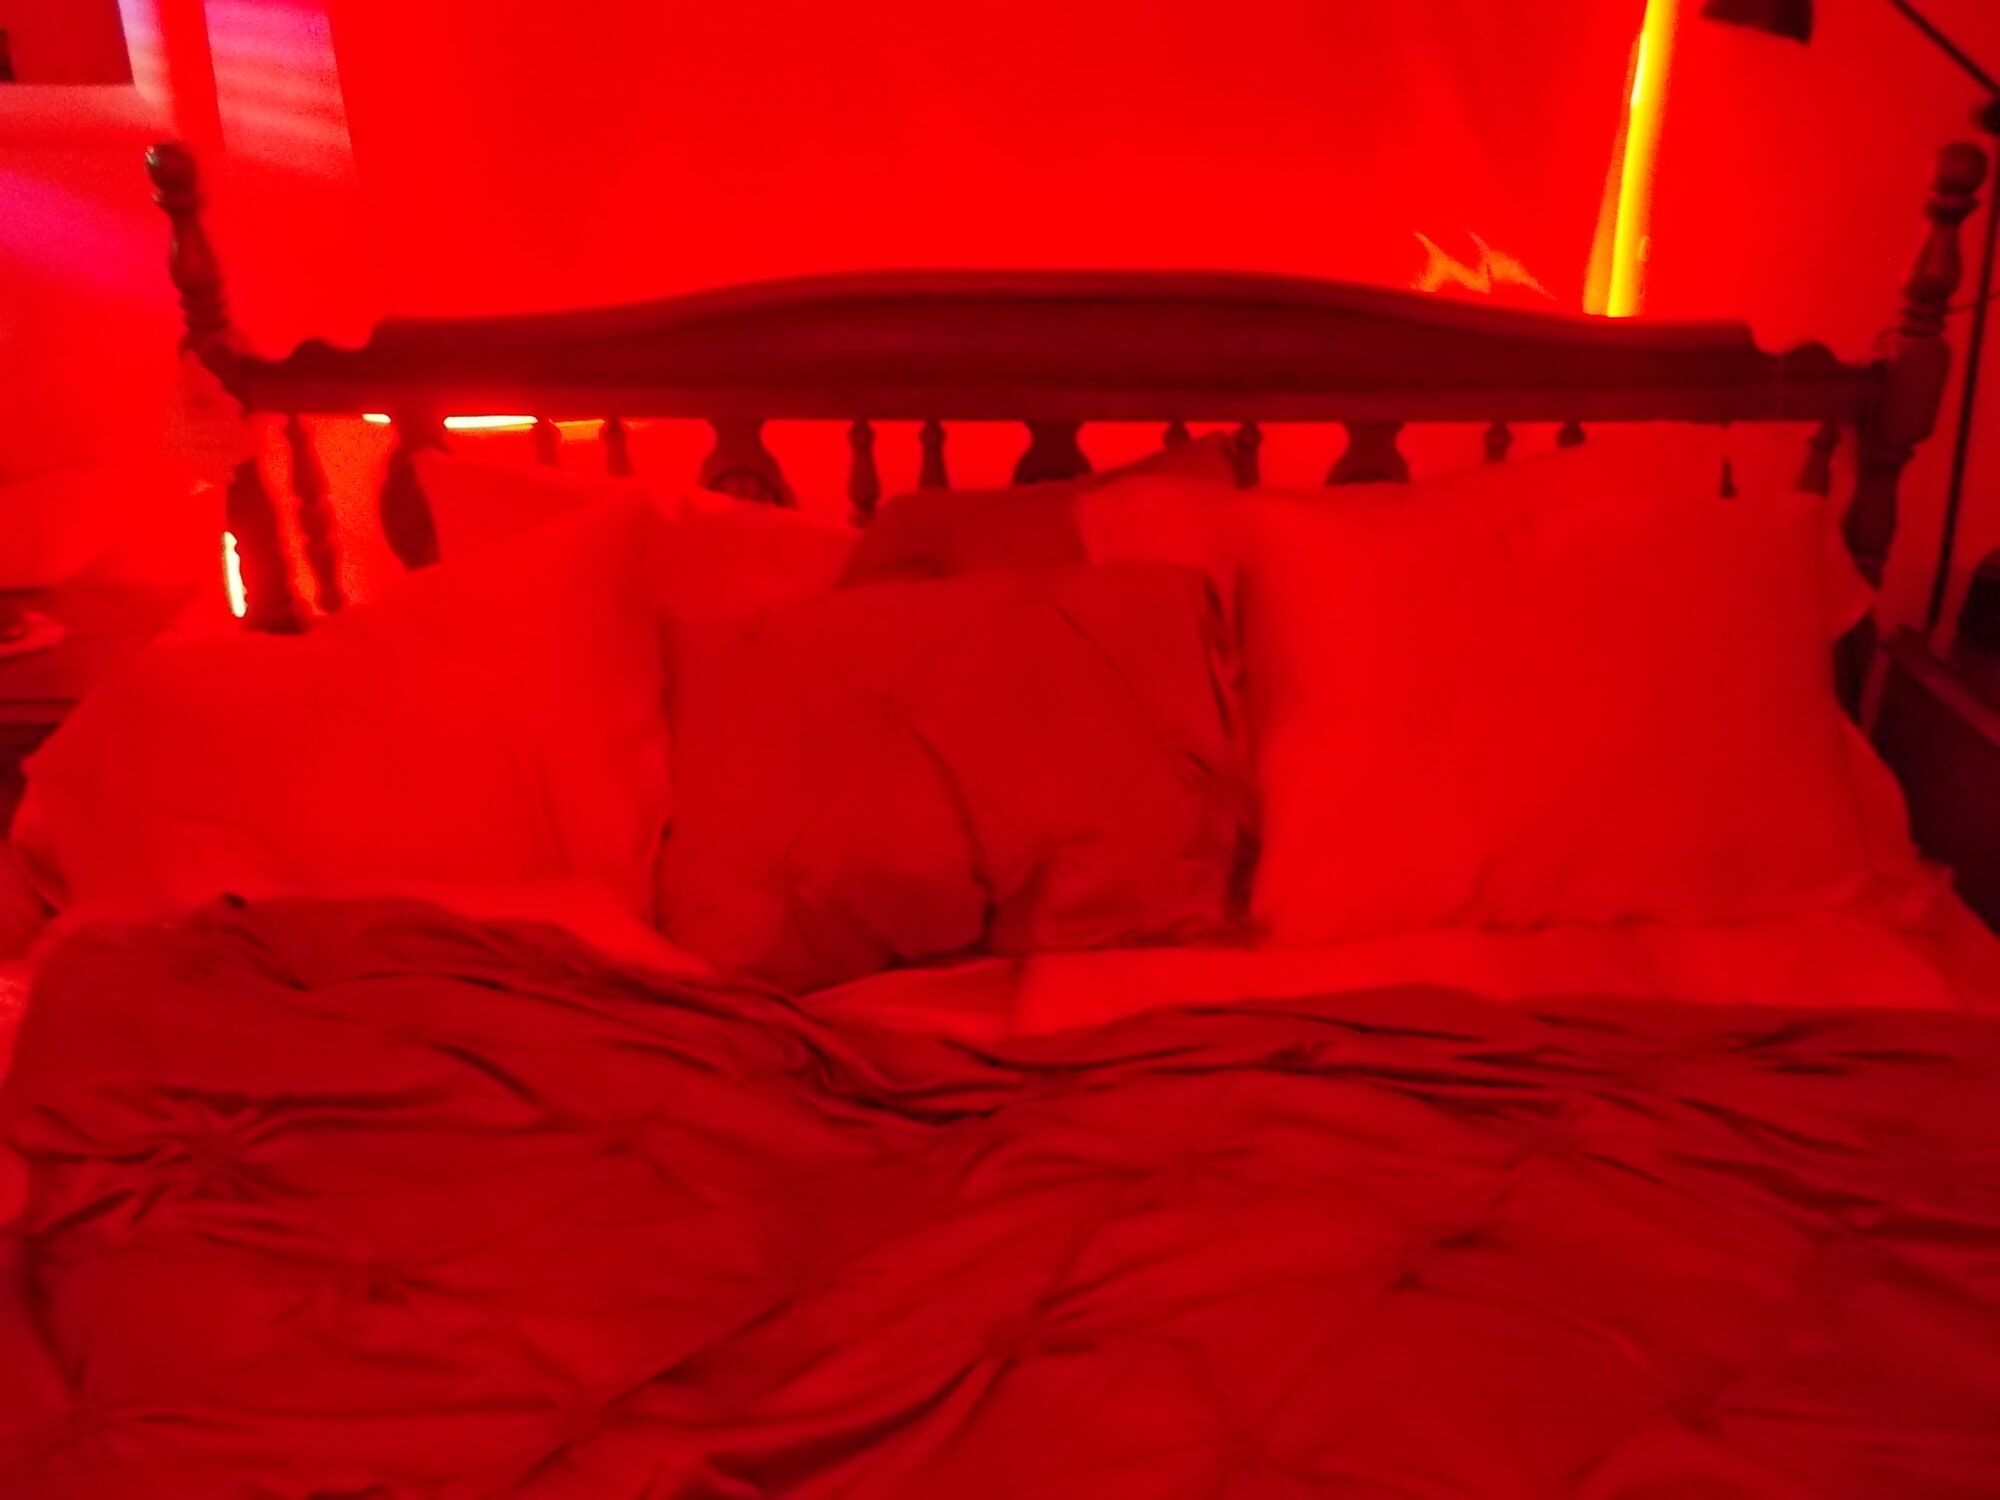 IN MY BEDROOM IN RED LIGHT. #5